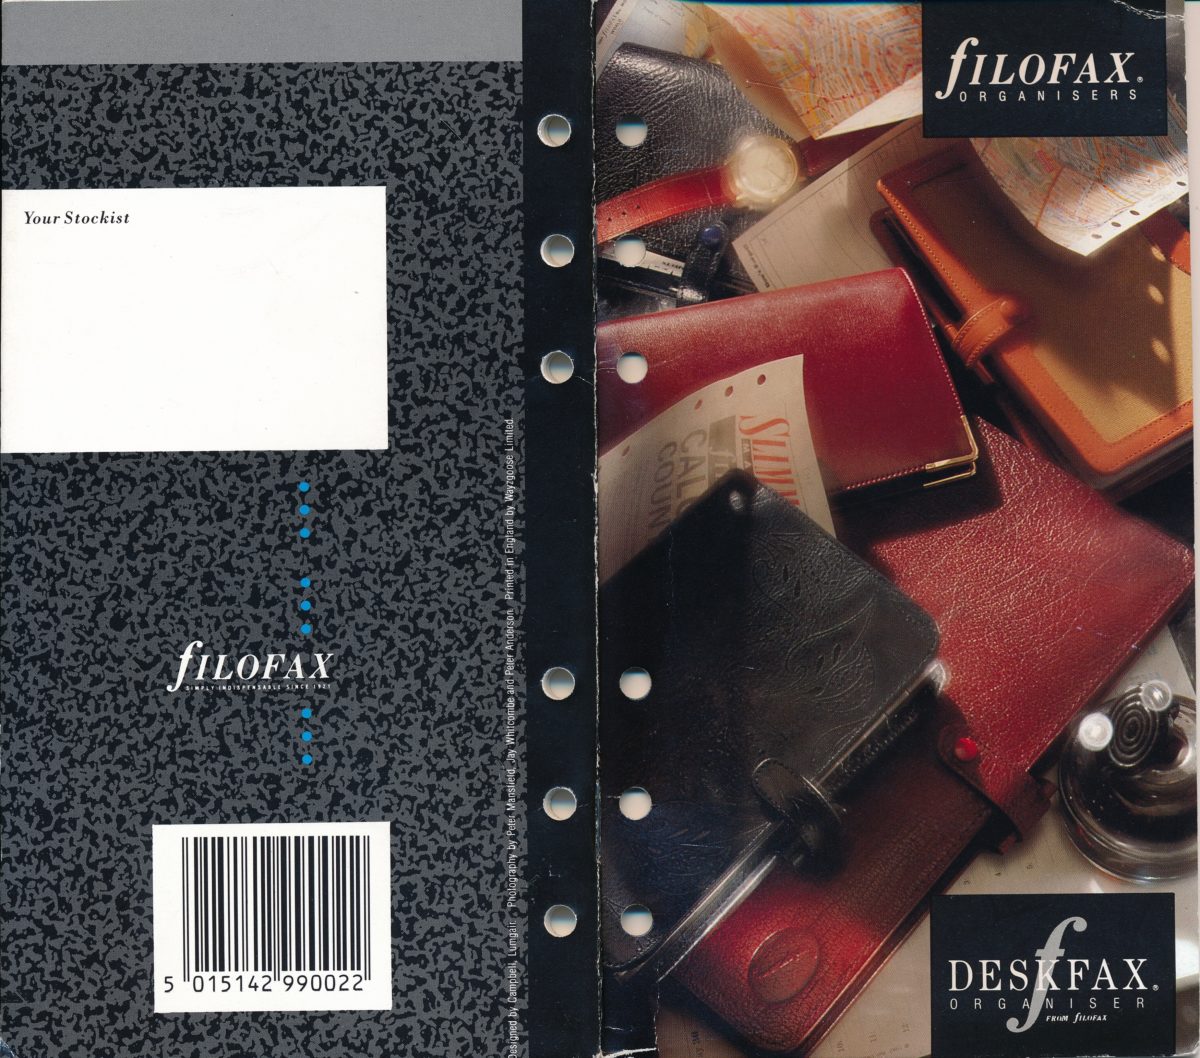 Filofax UK full catalogue 1988